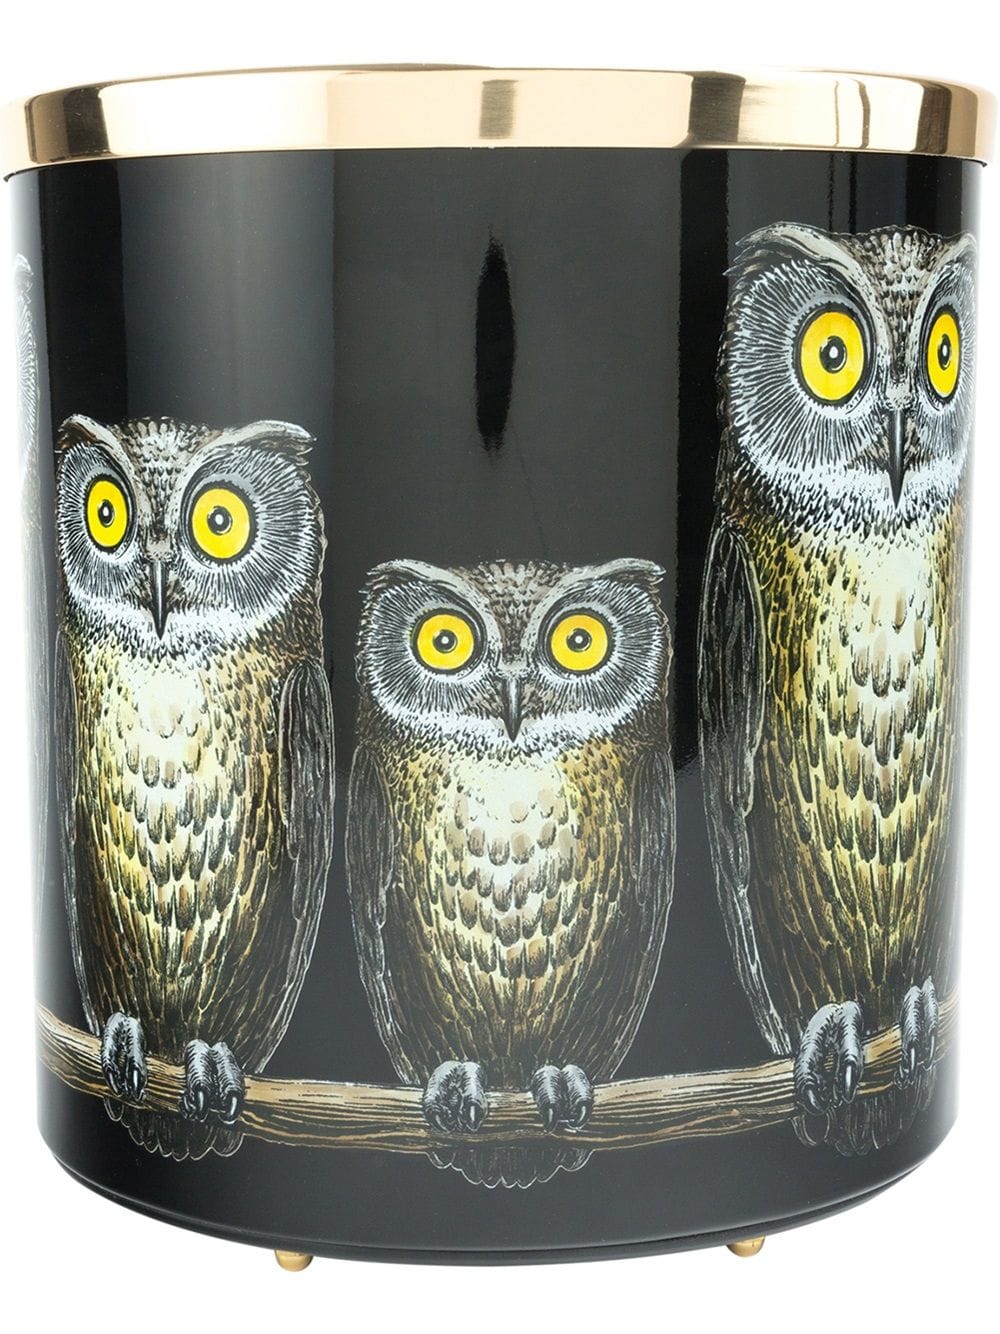  Fornasetti Owl Print Wastepaper Basket - Black 